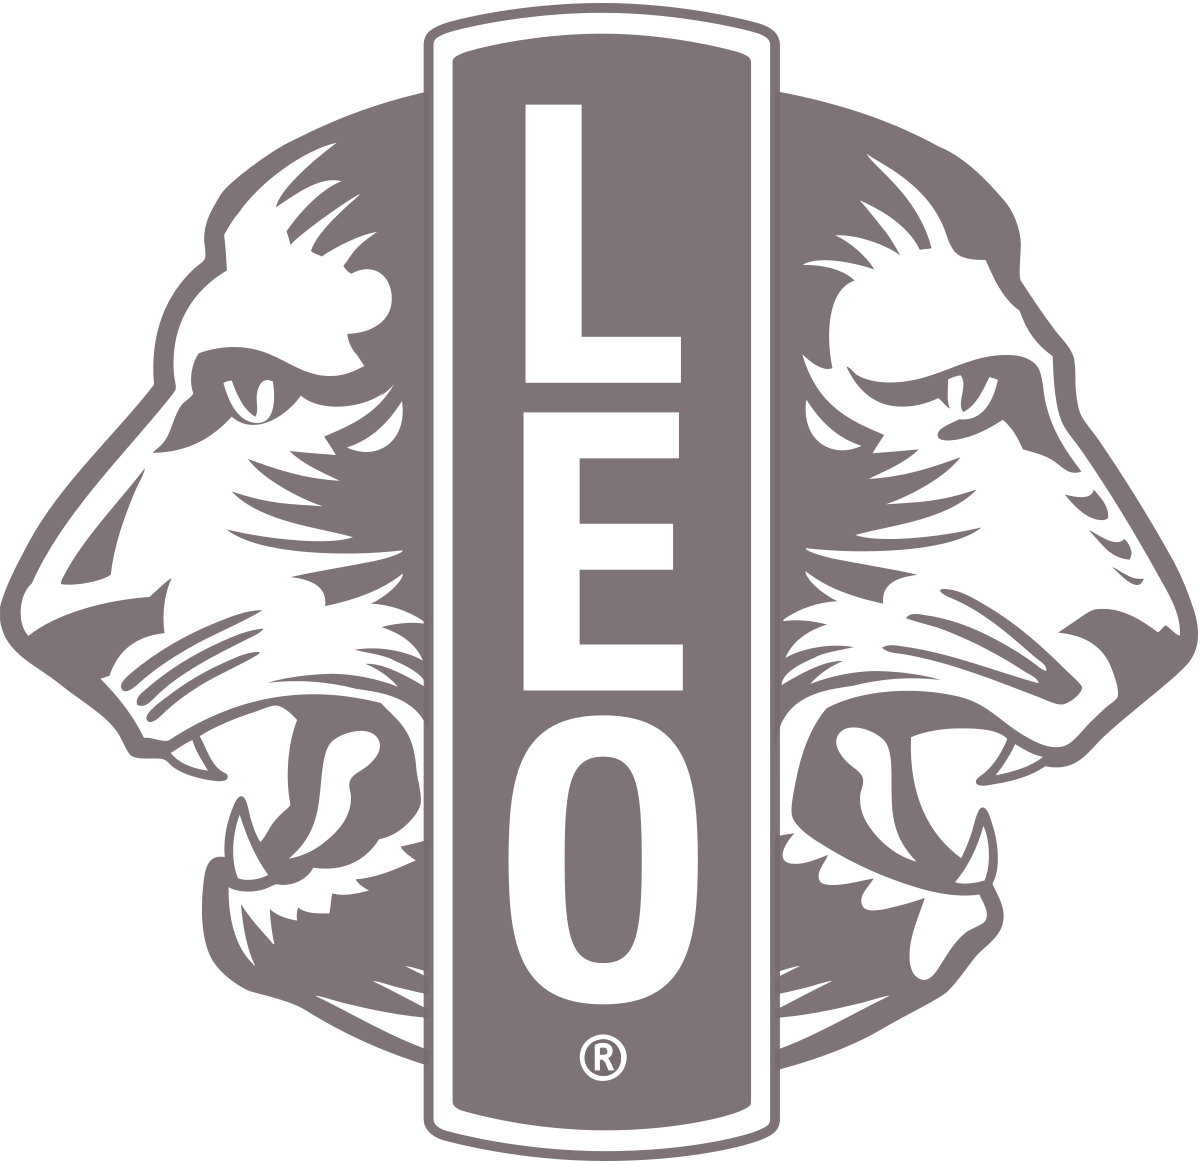 Leo Logo - Leo clubs